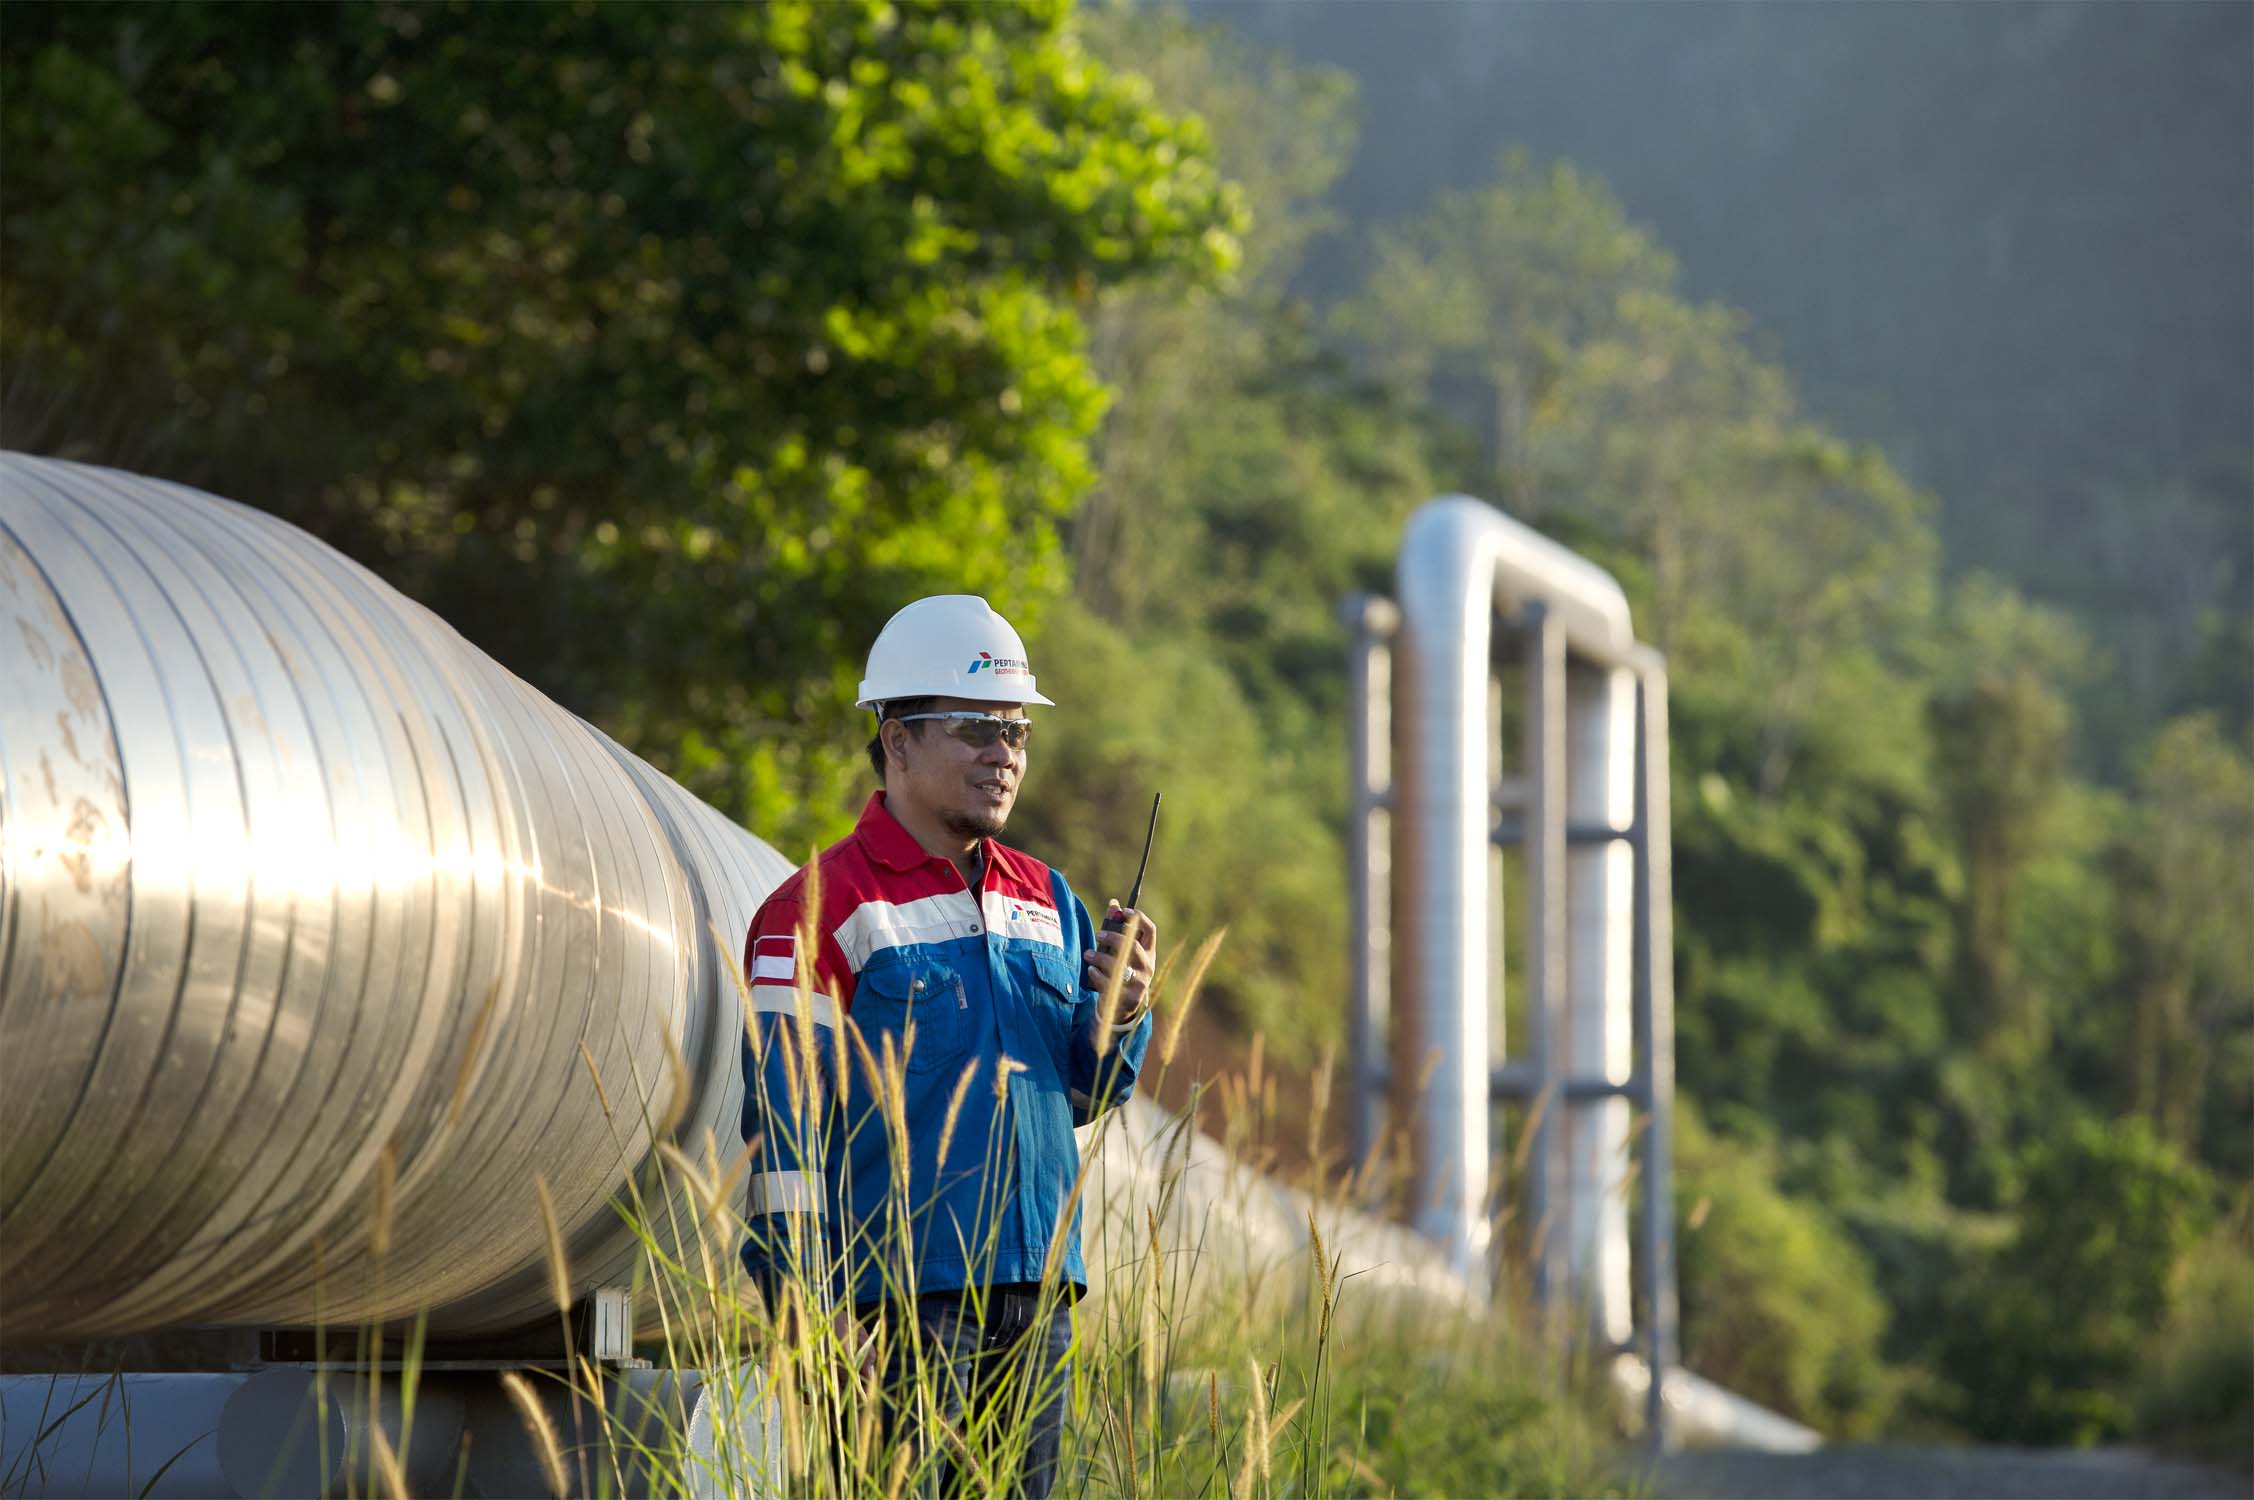 perusahaan tambang terbesar di indonesia-pertamina